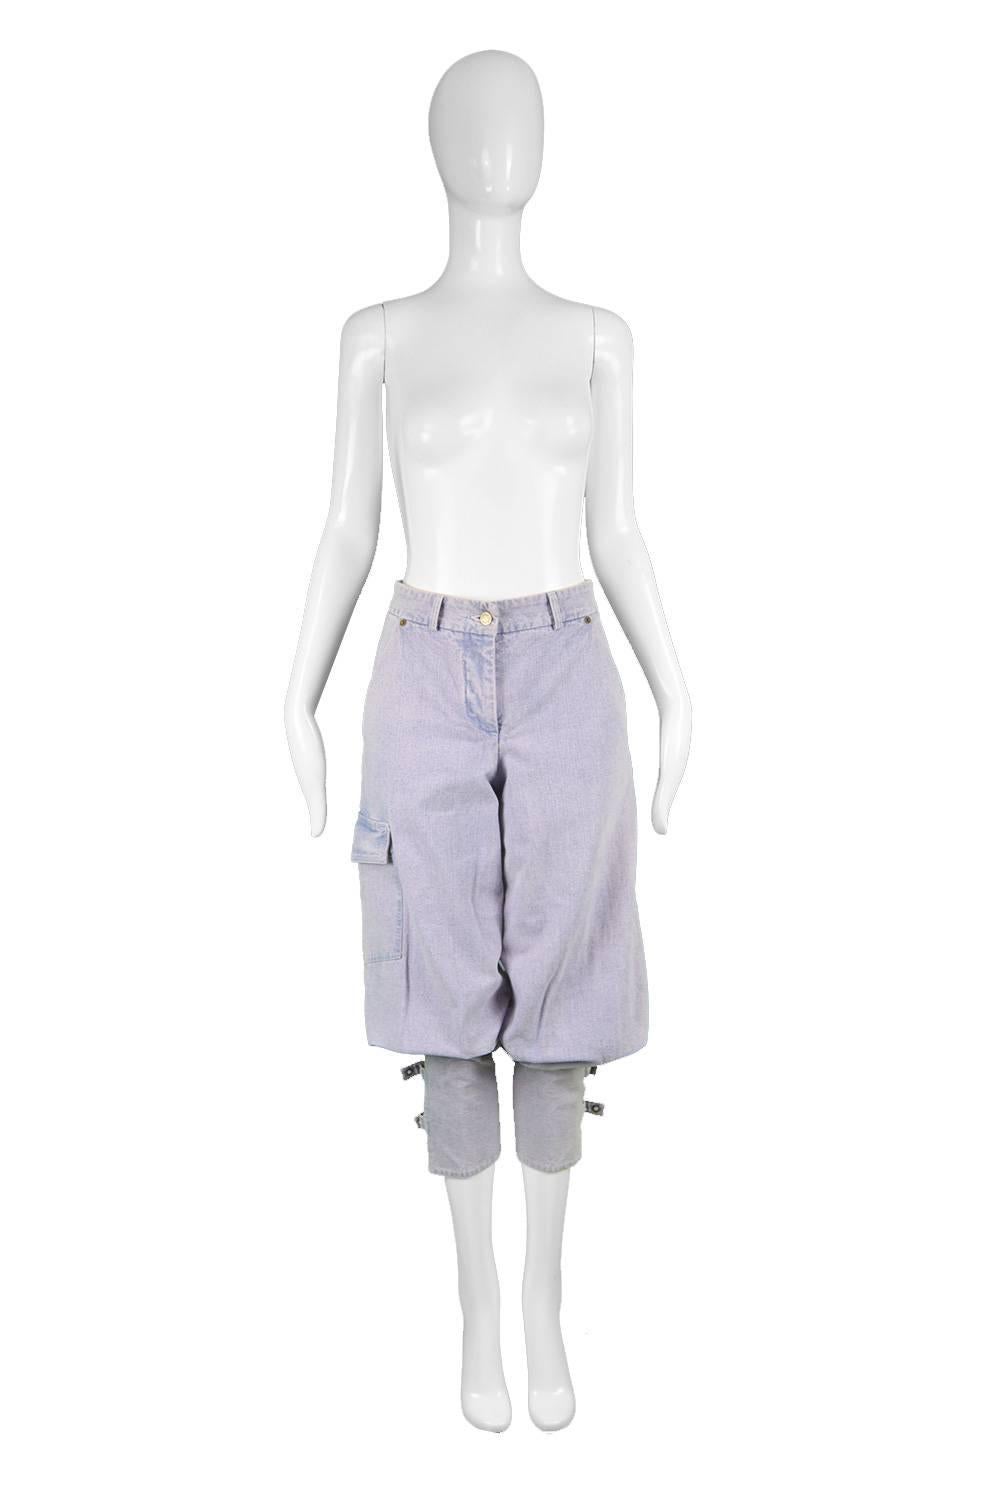 Chloé by Phoebe Philo Blue Pastel Pink Overdyed Denim Jeans / Shorts, S/S 2002

Estimated Modern Size: UK 10-12/ US 6-8/ EU 38-40. Please check measurements.  
Waist - 30” / 76cm
Hips - 38” / 96cm
Rise - 11” / 28cm
Inside Leg (full length) - 30” /